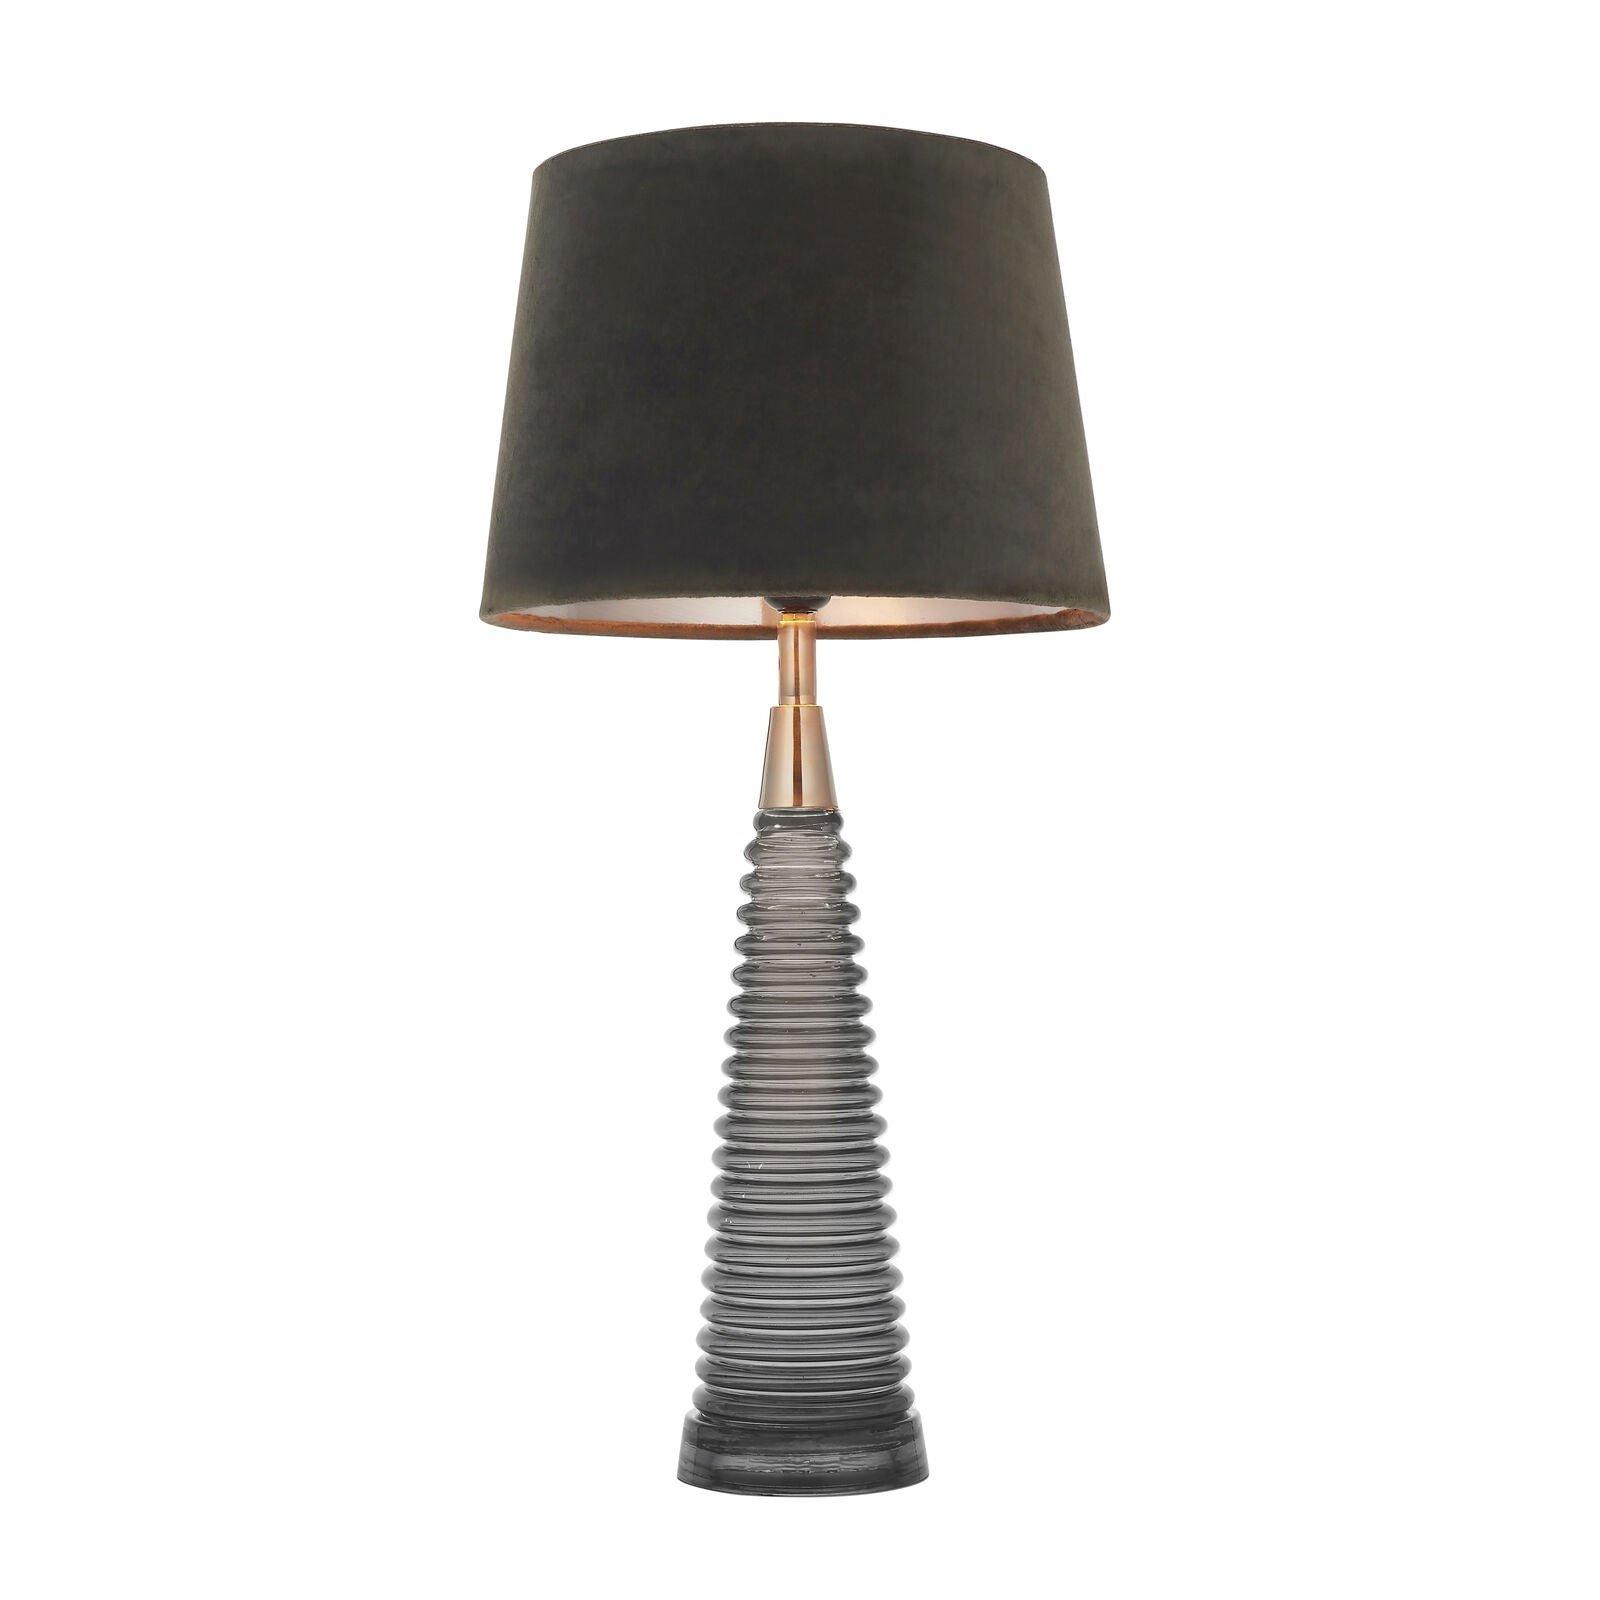 Table Lamp - Charcoal Ribbed Glass, Bright Nickel Plate & Mocha Velvet - 40W E27